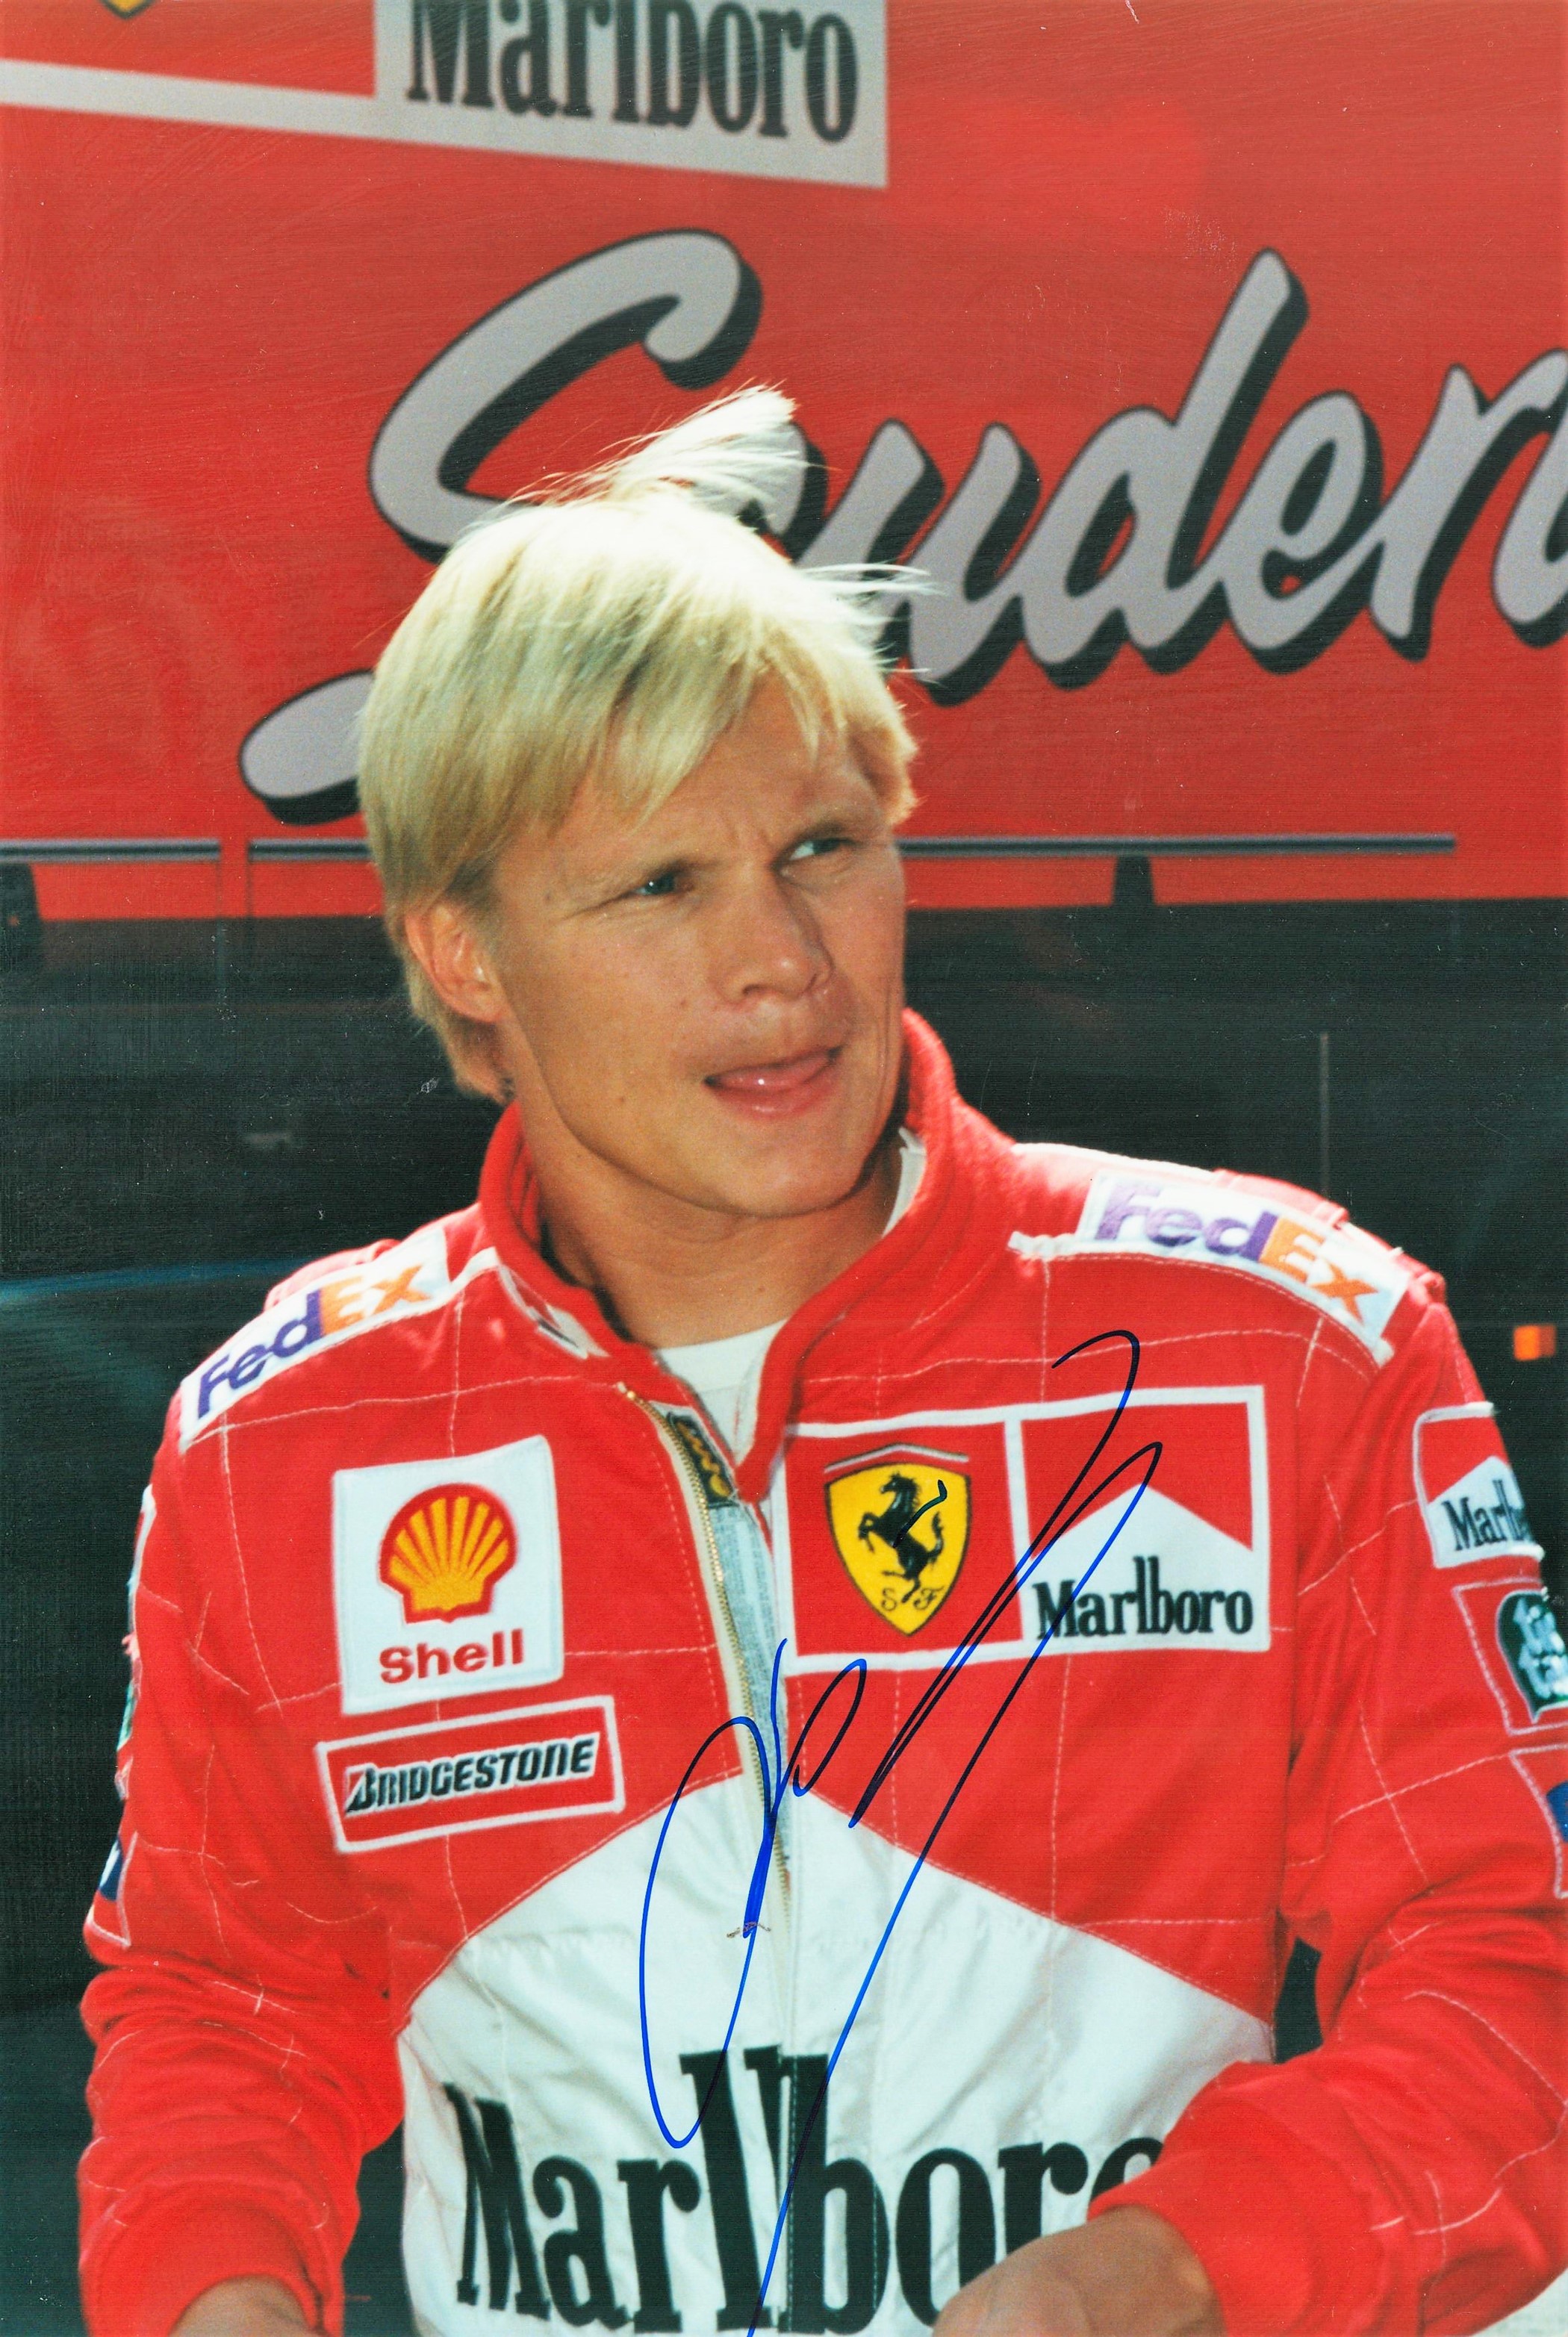 Motor Racing Mika Juhani Salo (born 30 November 1966) is a Finnish former professional racing